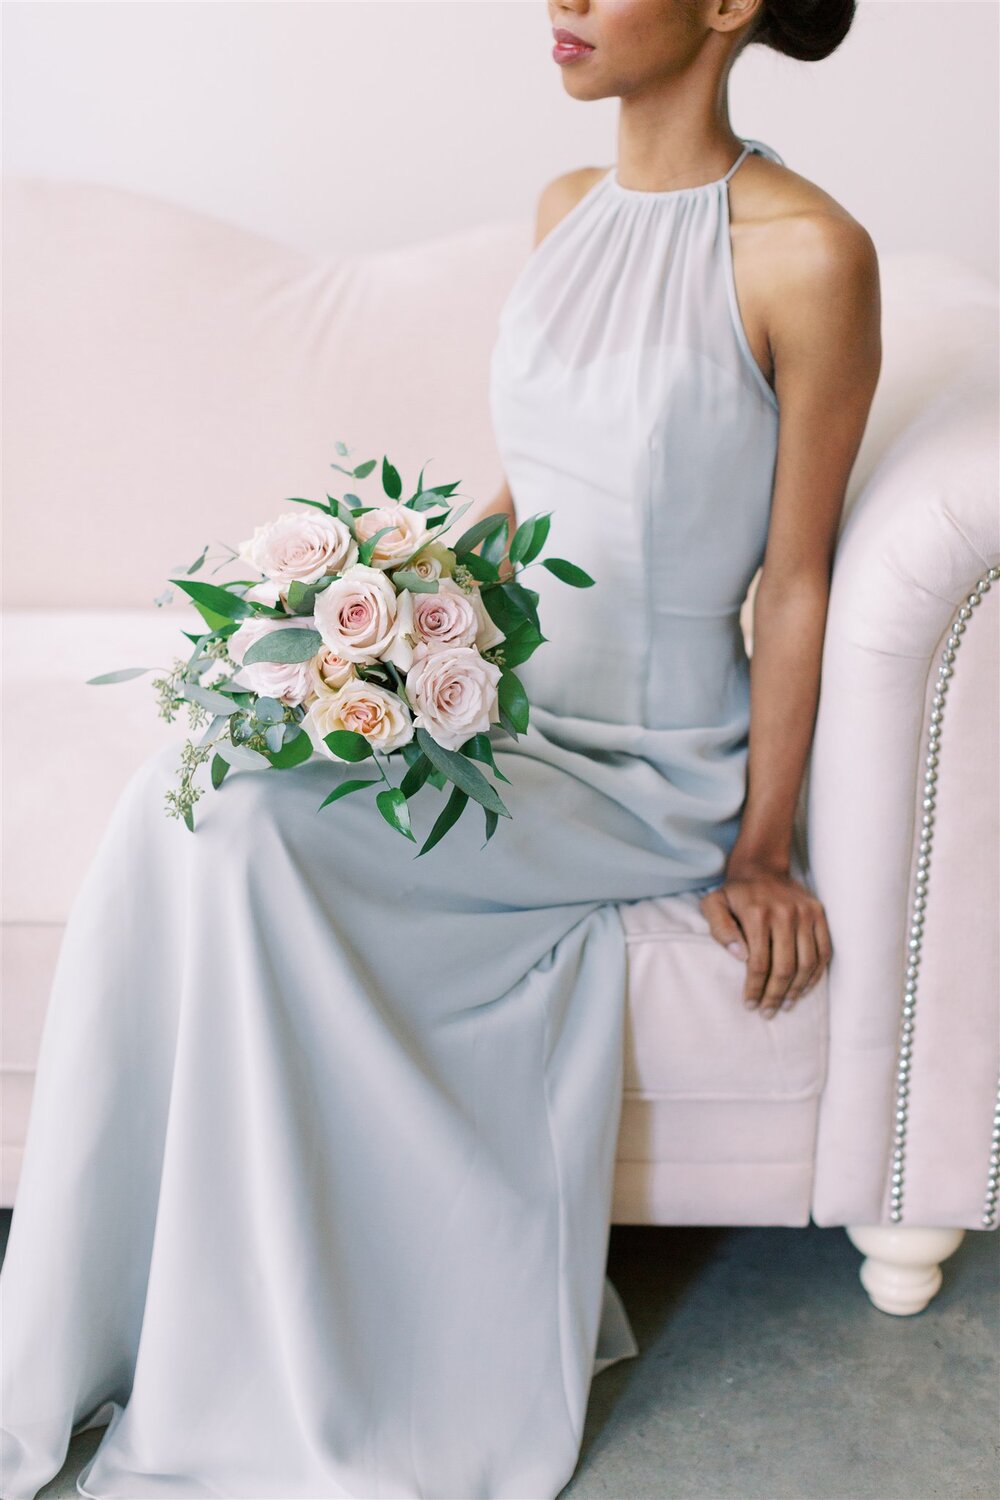 flowerlab-st. louis-budget-wedding-florist-blush-bridesmaid-bouquet.jpg